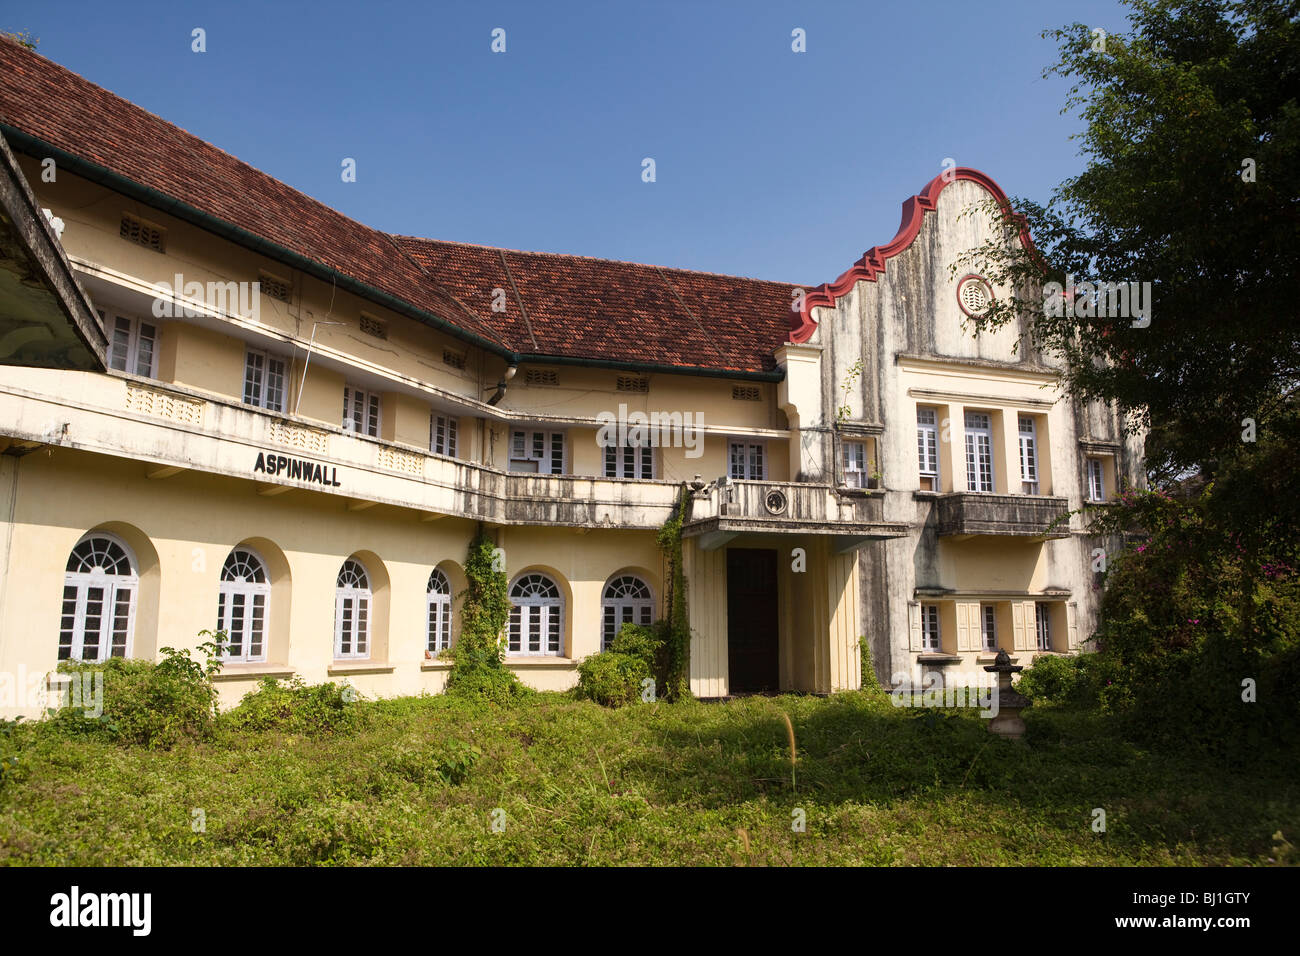 India, Kerala, Kochi, Fort Cochin, River Calvathy Road, Aspinwall Building, Dutch influenced colonial architecture Stock Photo